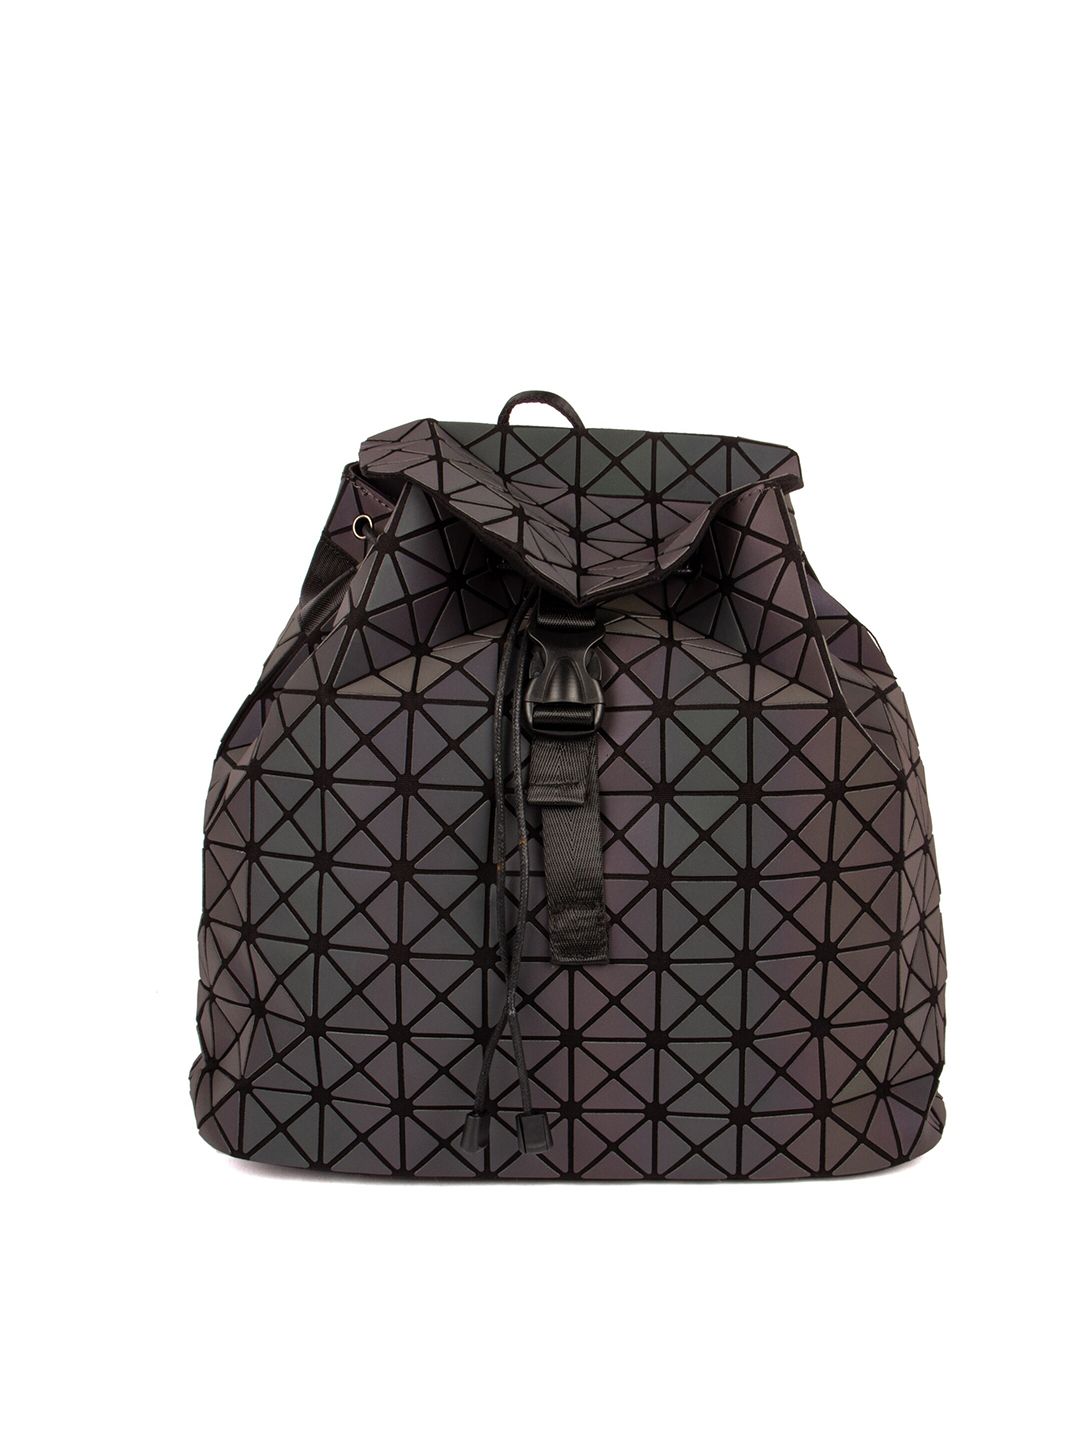 BAOMI Geometric Range Grey Color Soft One Size Handbag Price in India